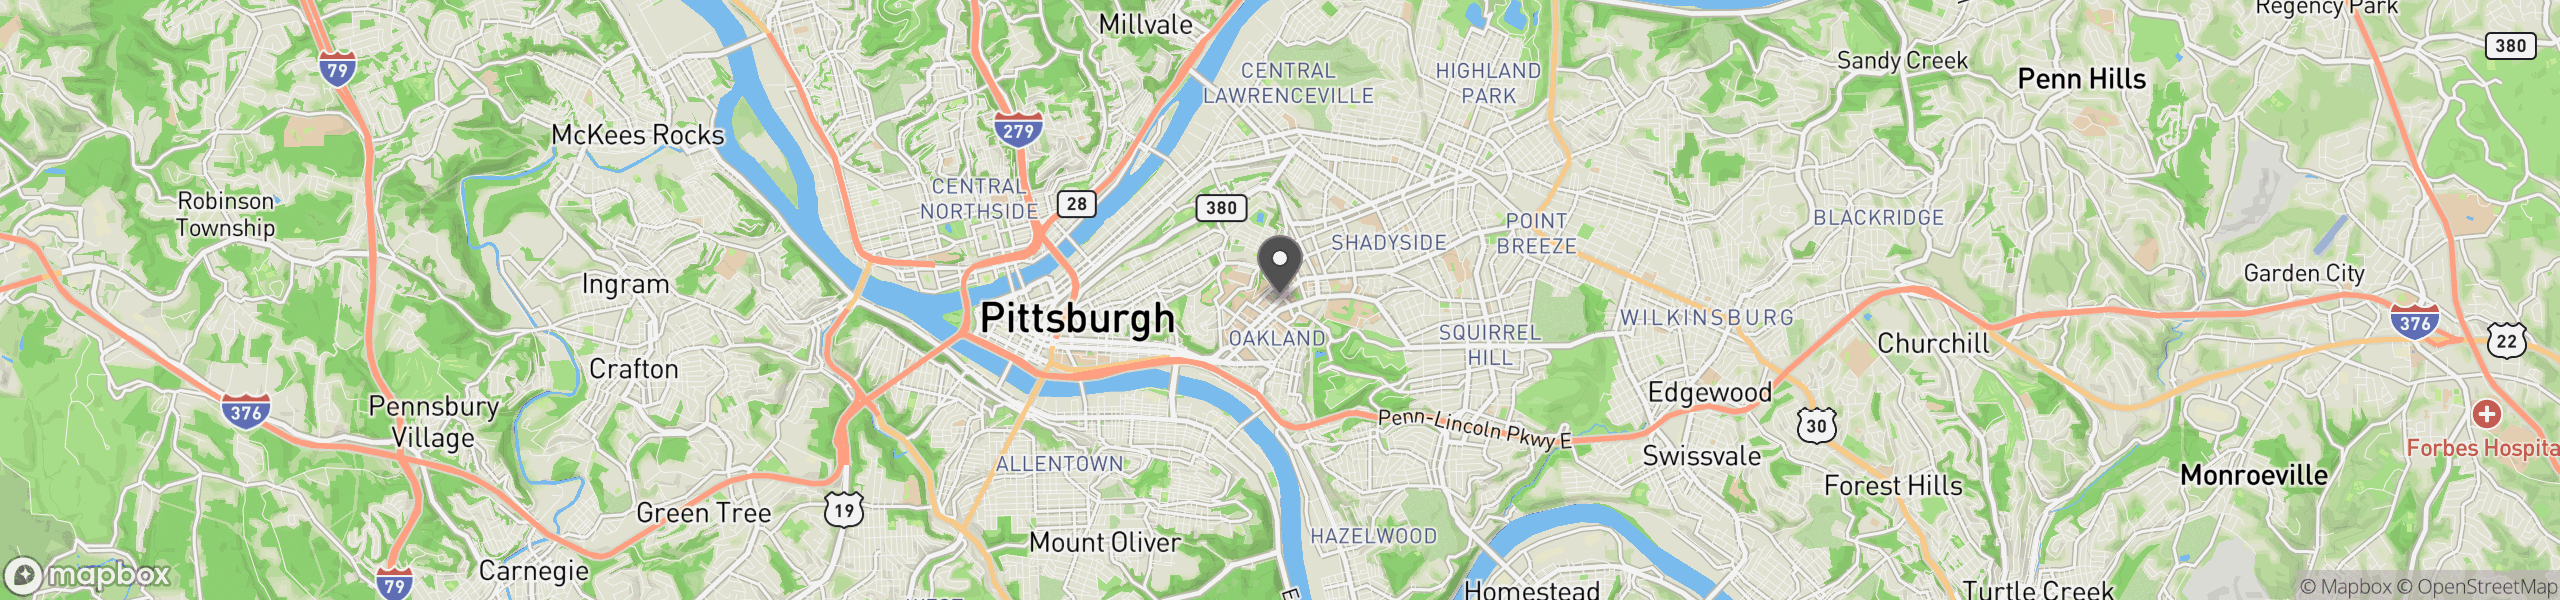 Pittsburgh, PA 15213